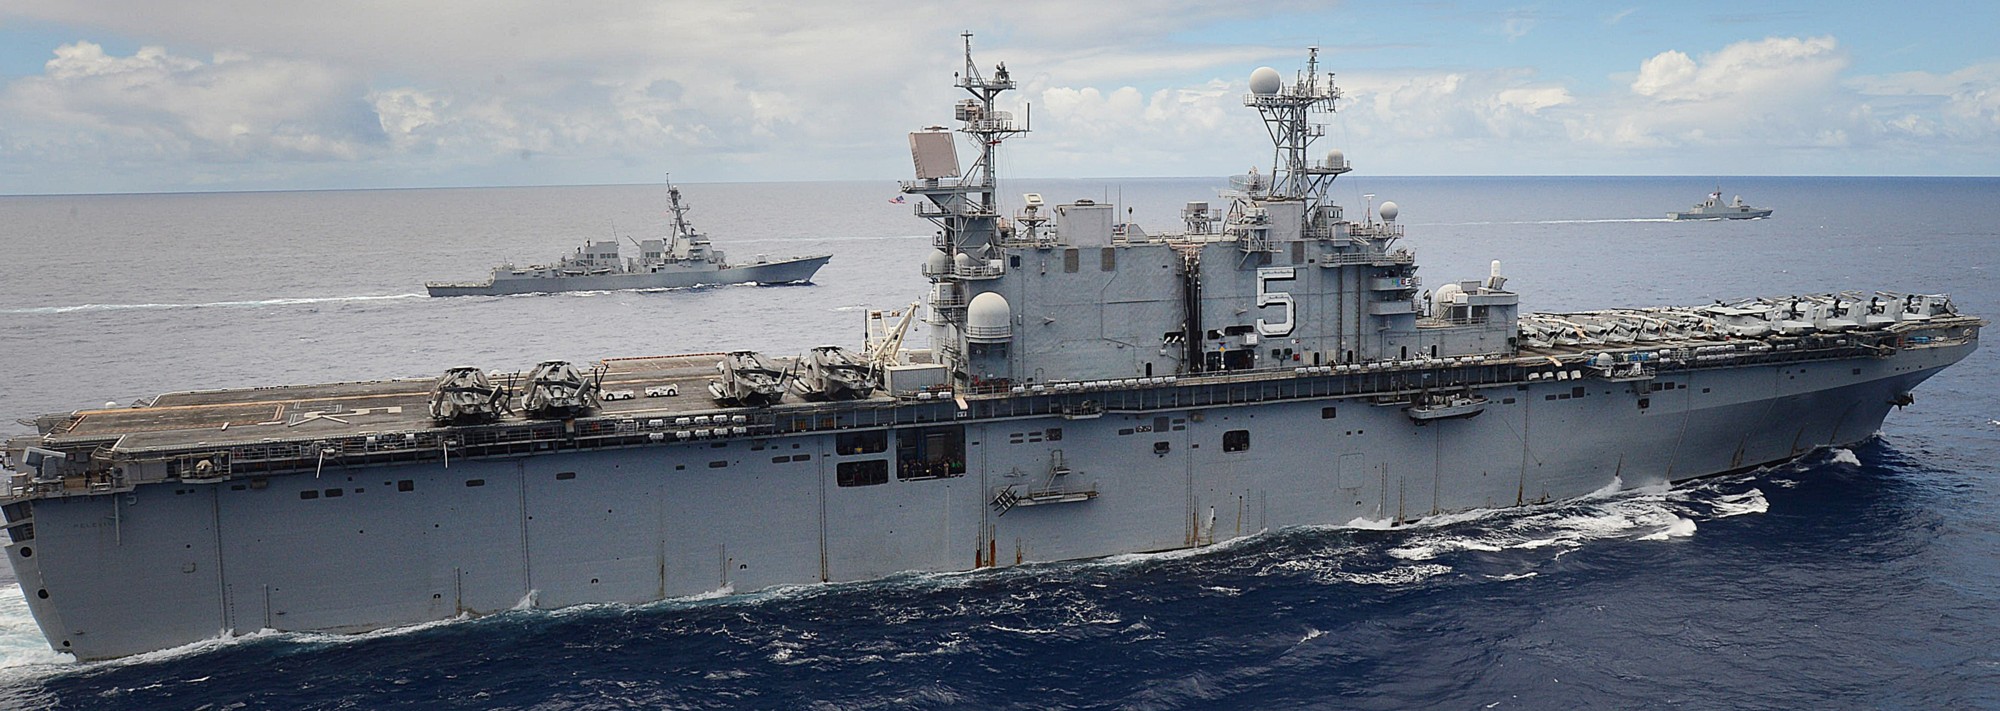 lha-5 uss peleliu tarawa class amphibious assault ship landing helicopter us navy rimpac 2014 110